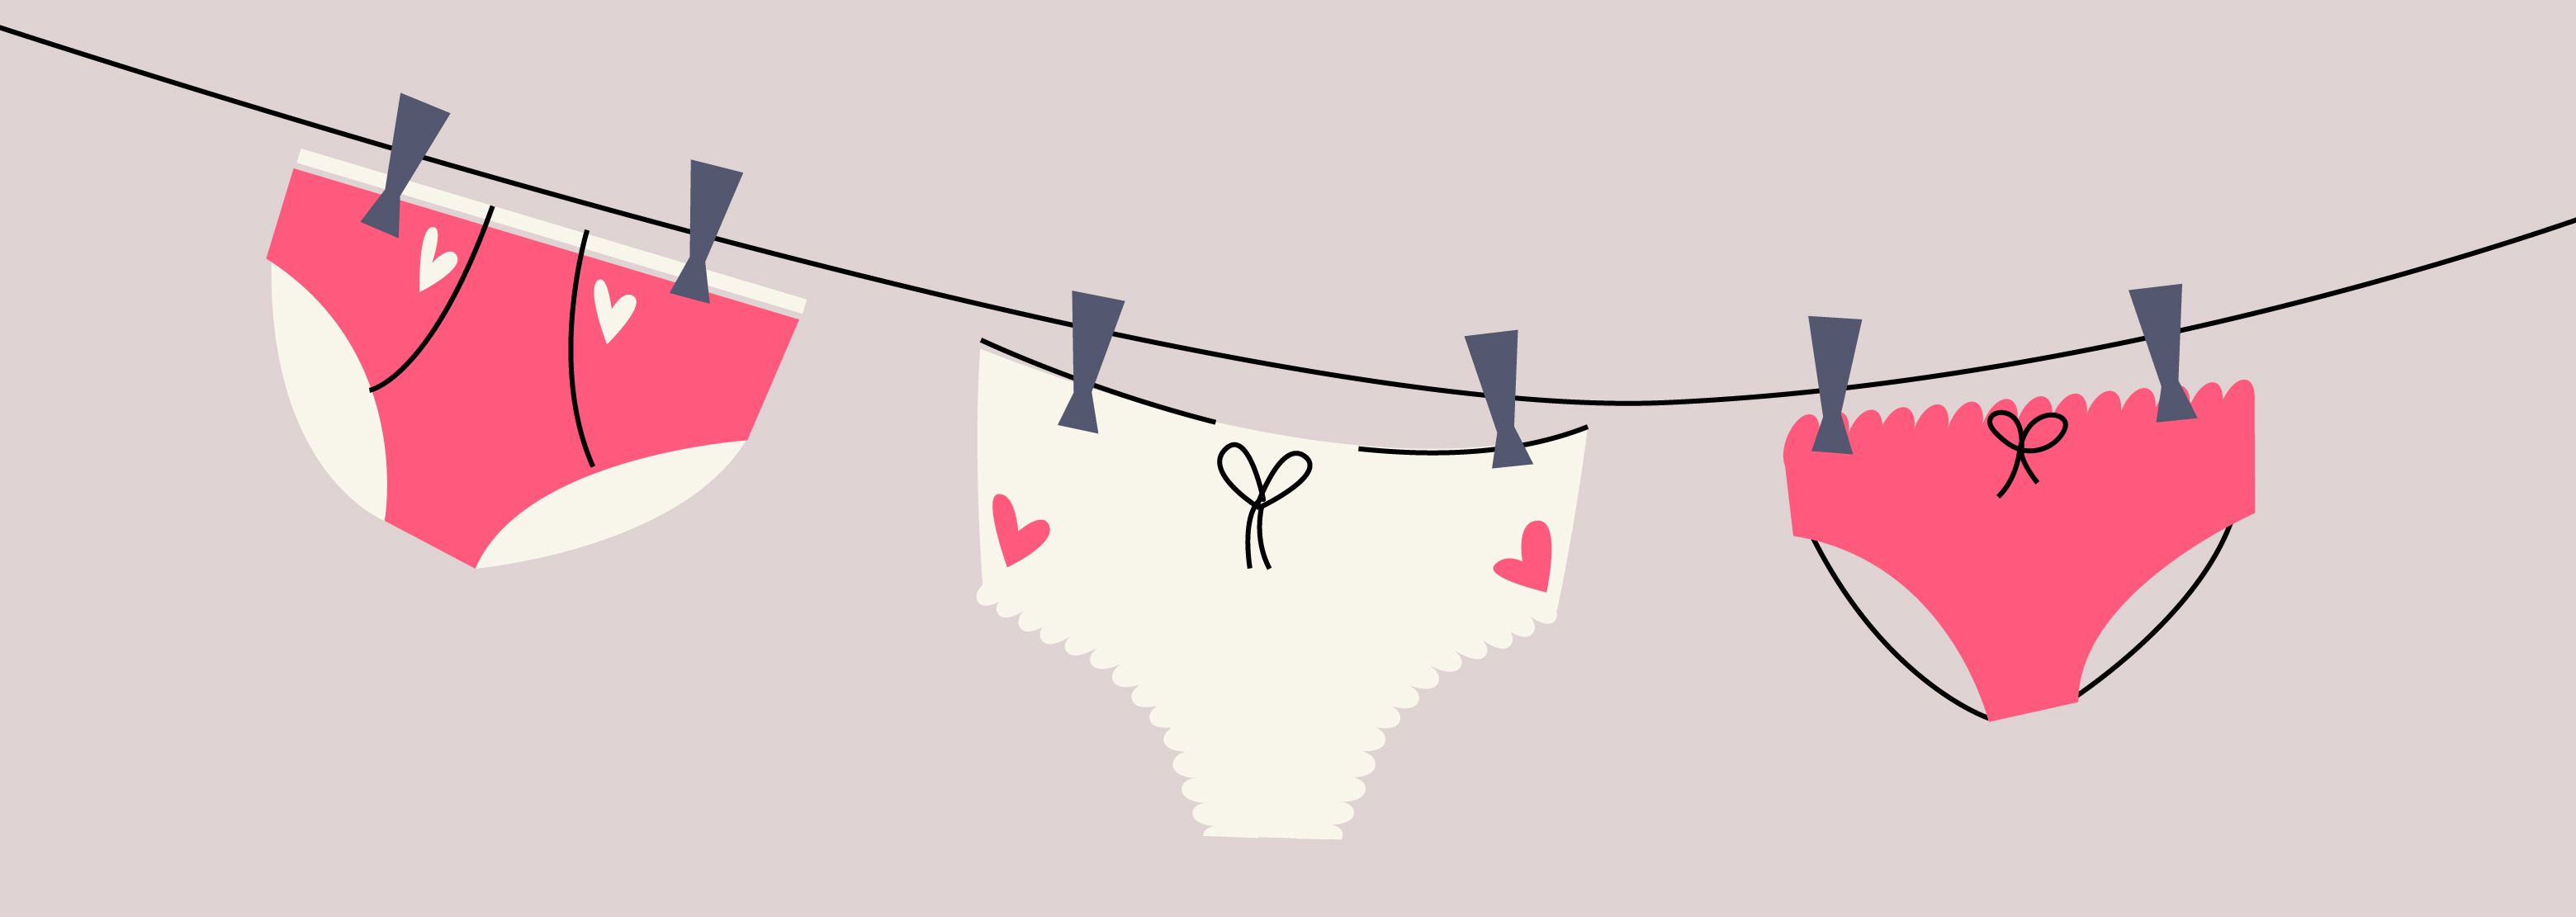 how to wash menstrual underwear Hot Sale - OFF 74%